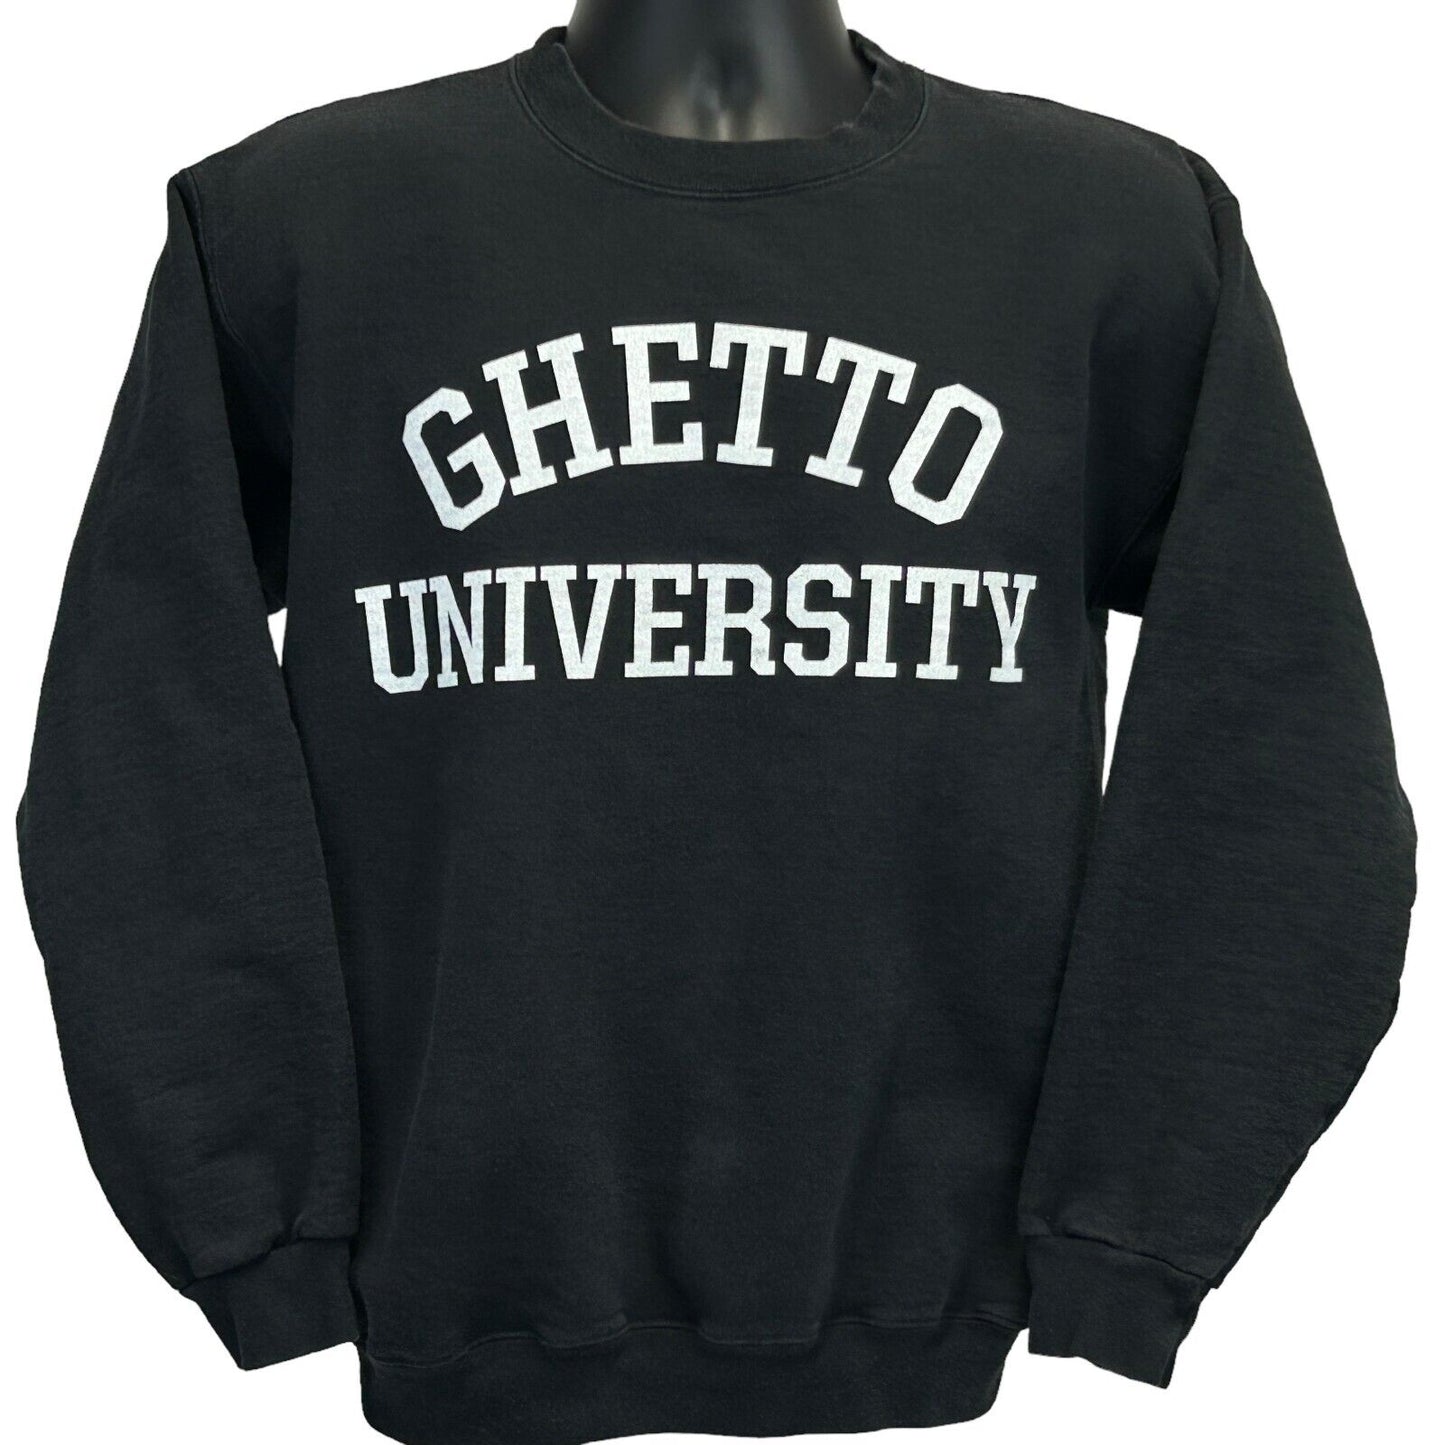 Ghetto University Sweatshirt Small Rap Hip Hop Crew Neck Sweater Mens Black